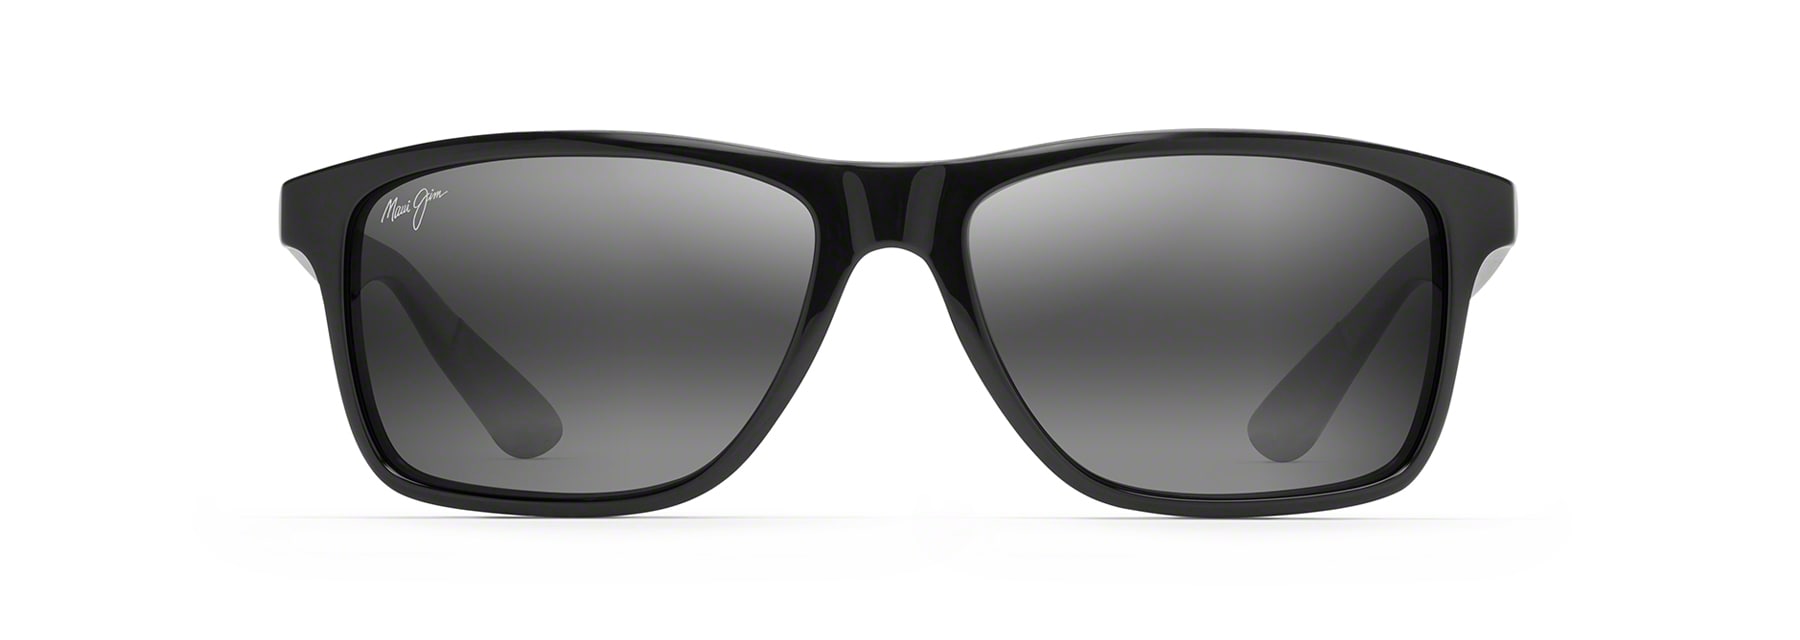 Maui Jim BANYANS UNISEX - Sunglasses - gloss black/black - Zalando.co.uk